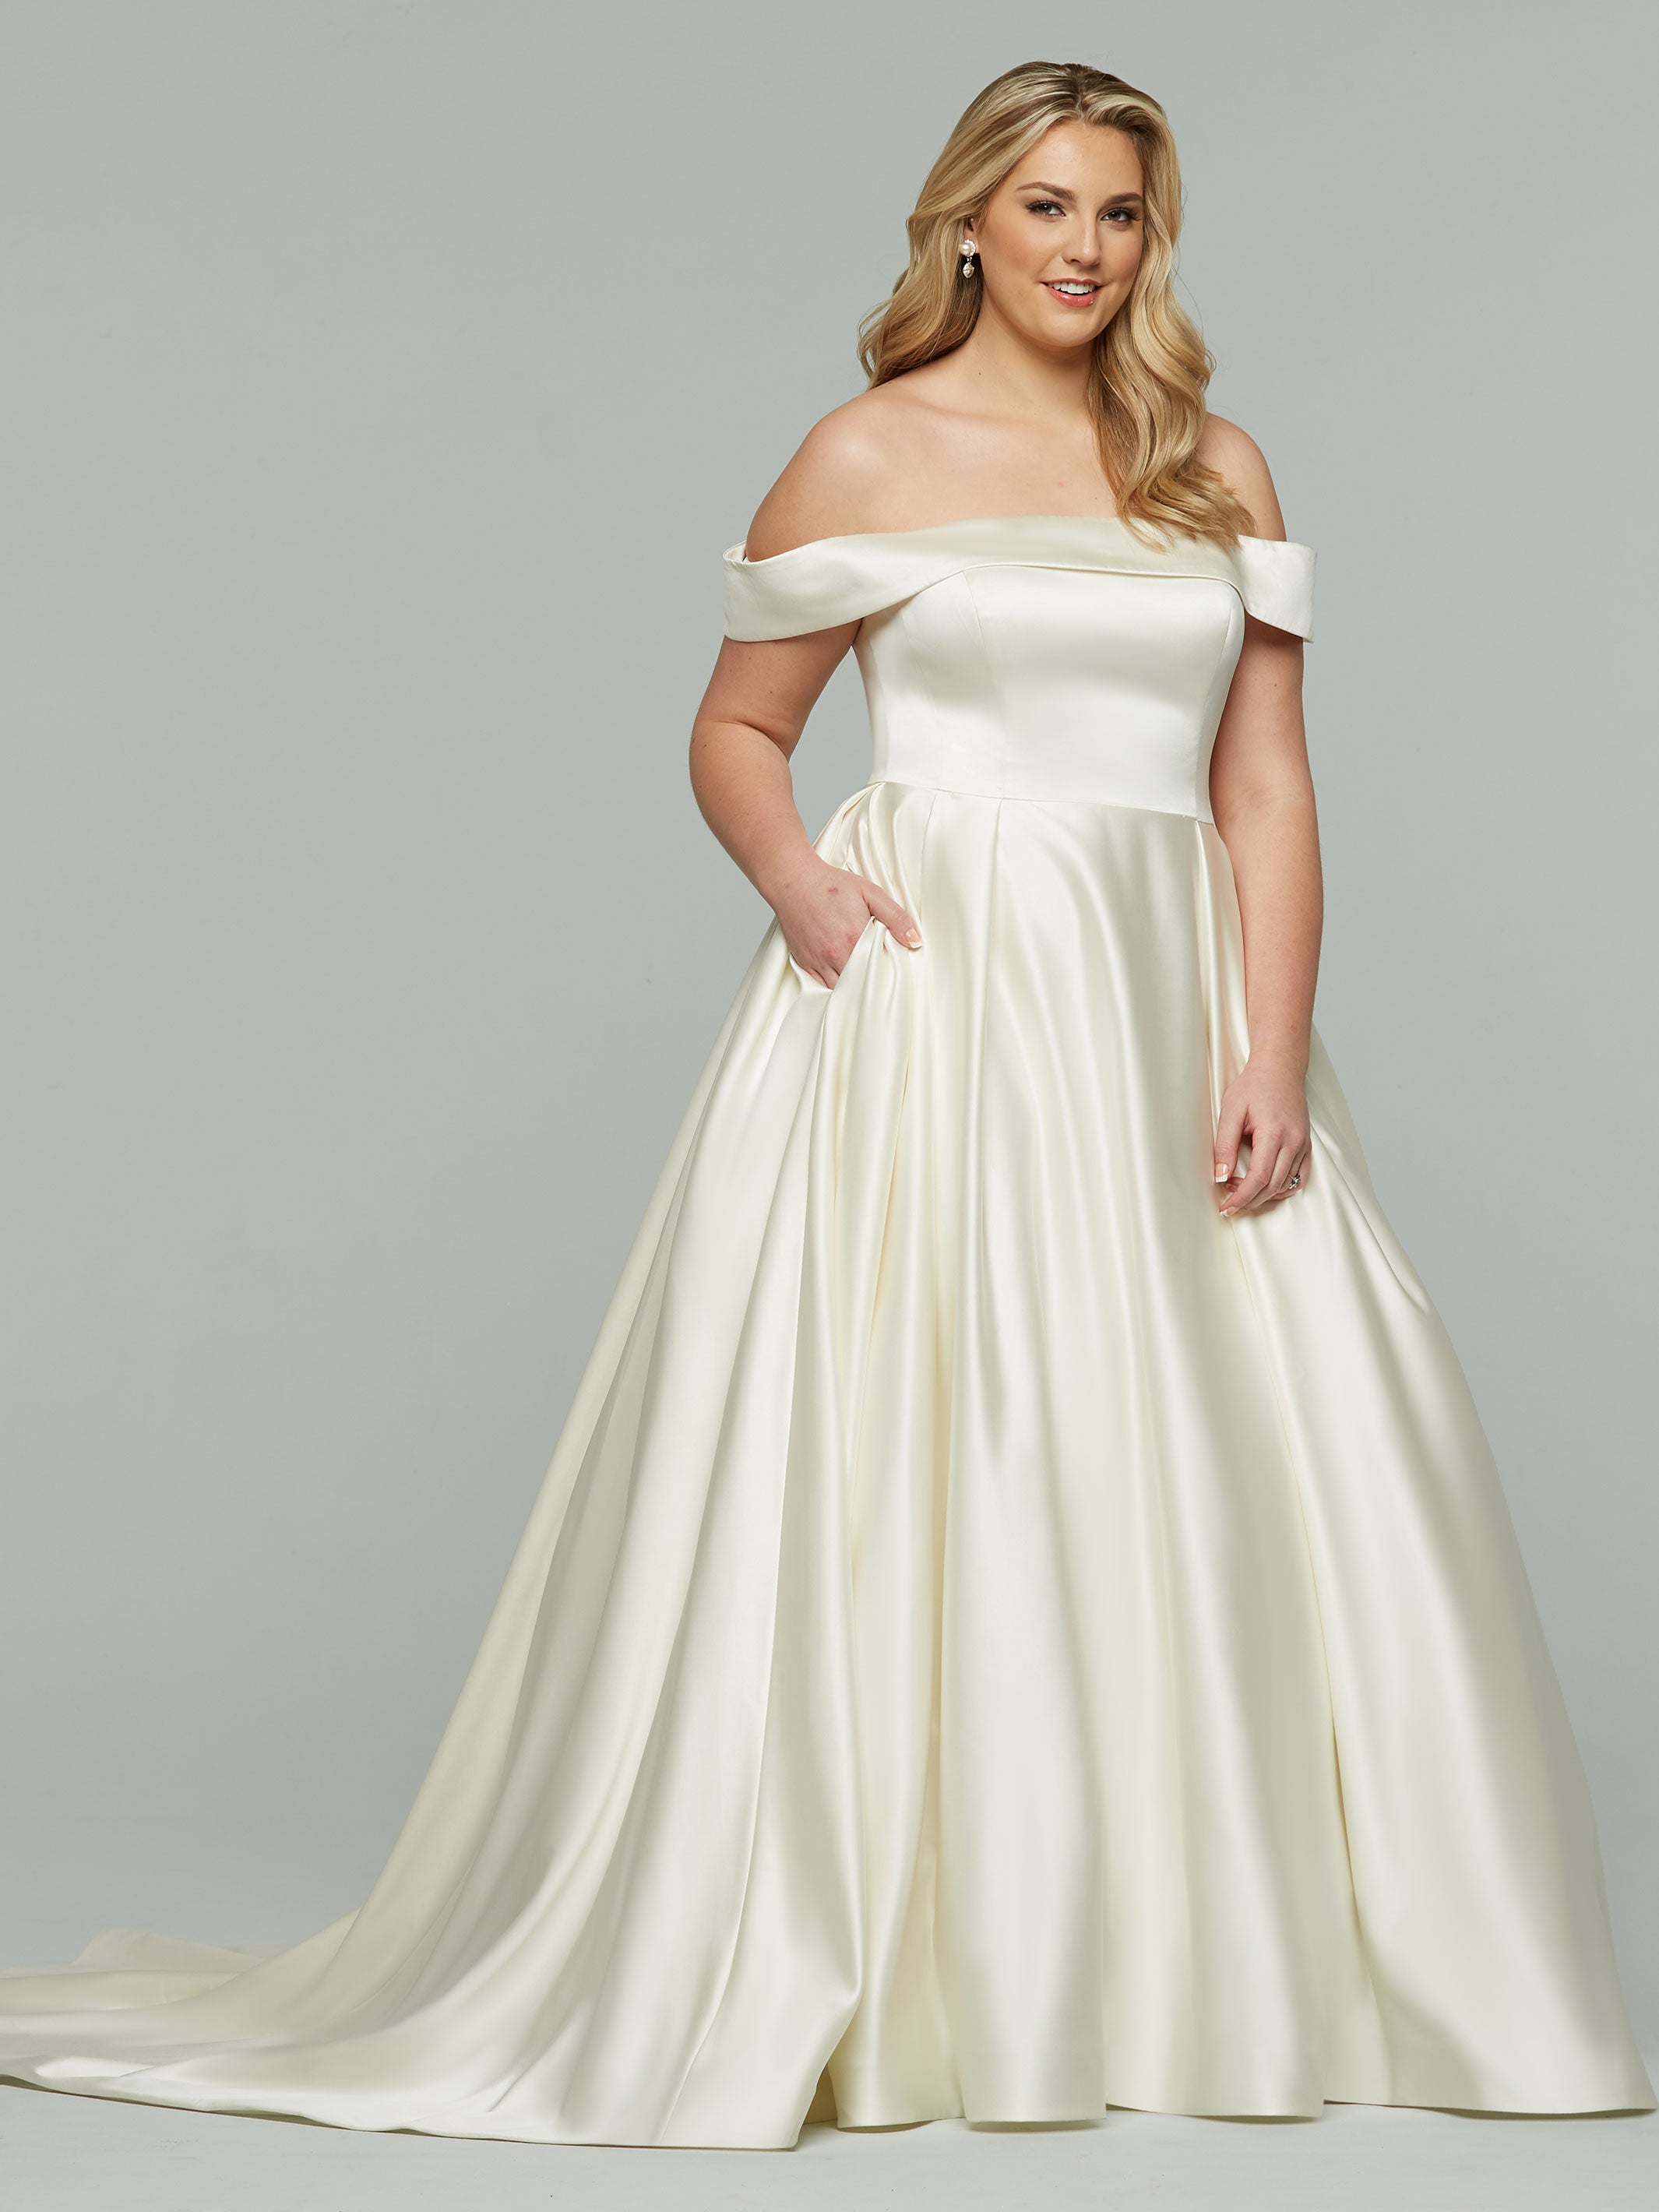 Types of Wedding Dress Straps - Avery Austin